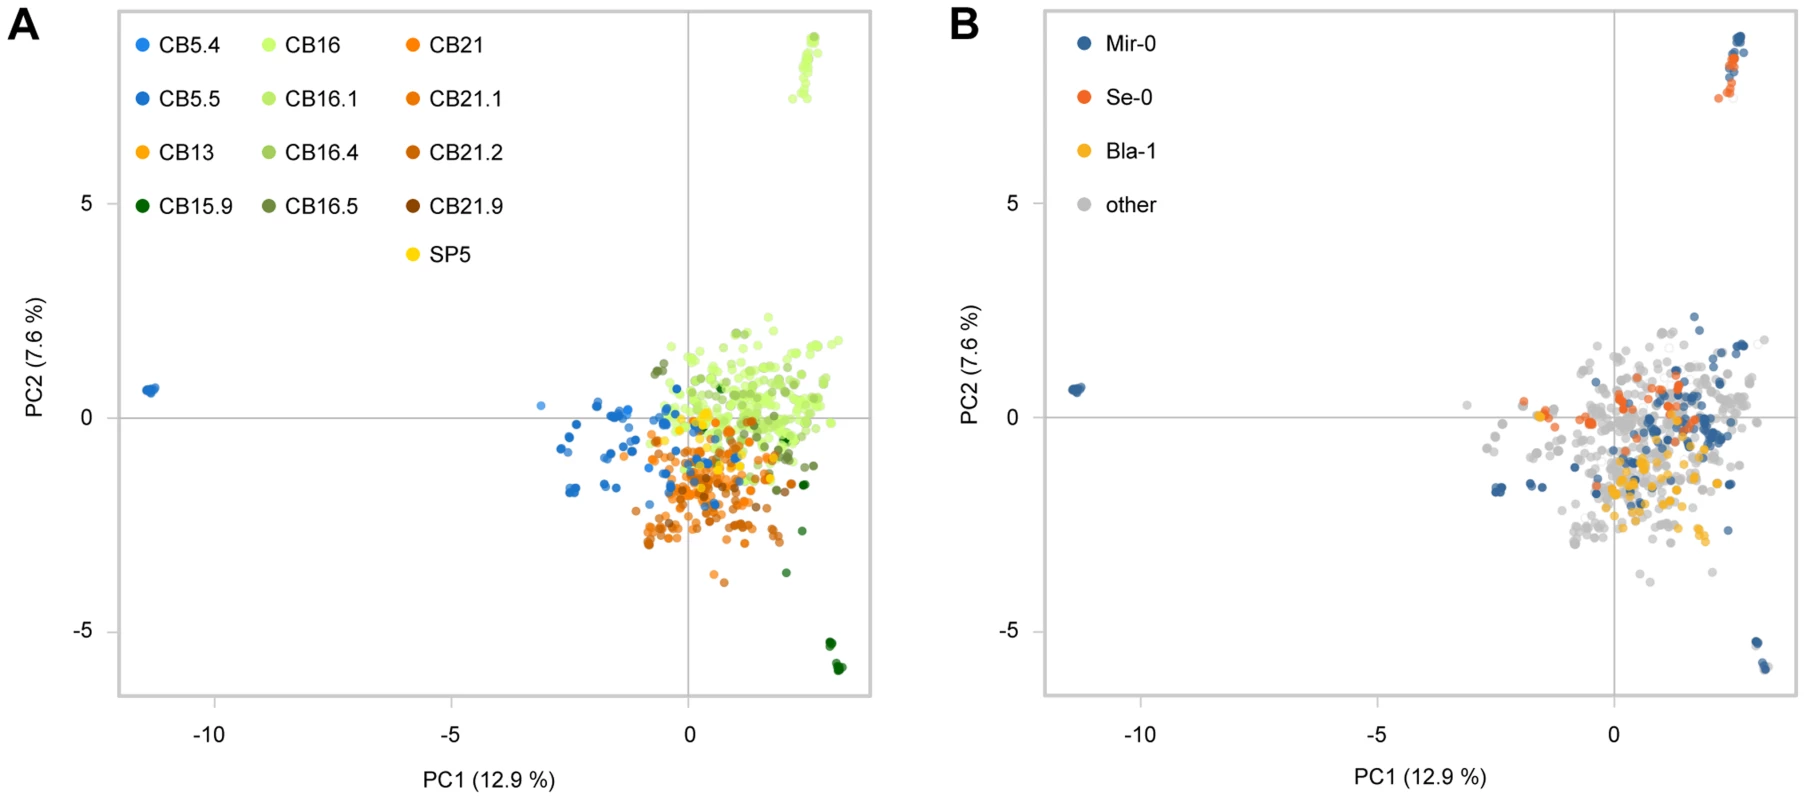 Genome-wide analysis of Costa Brava populations.